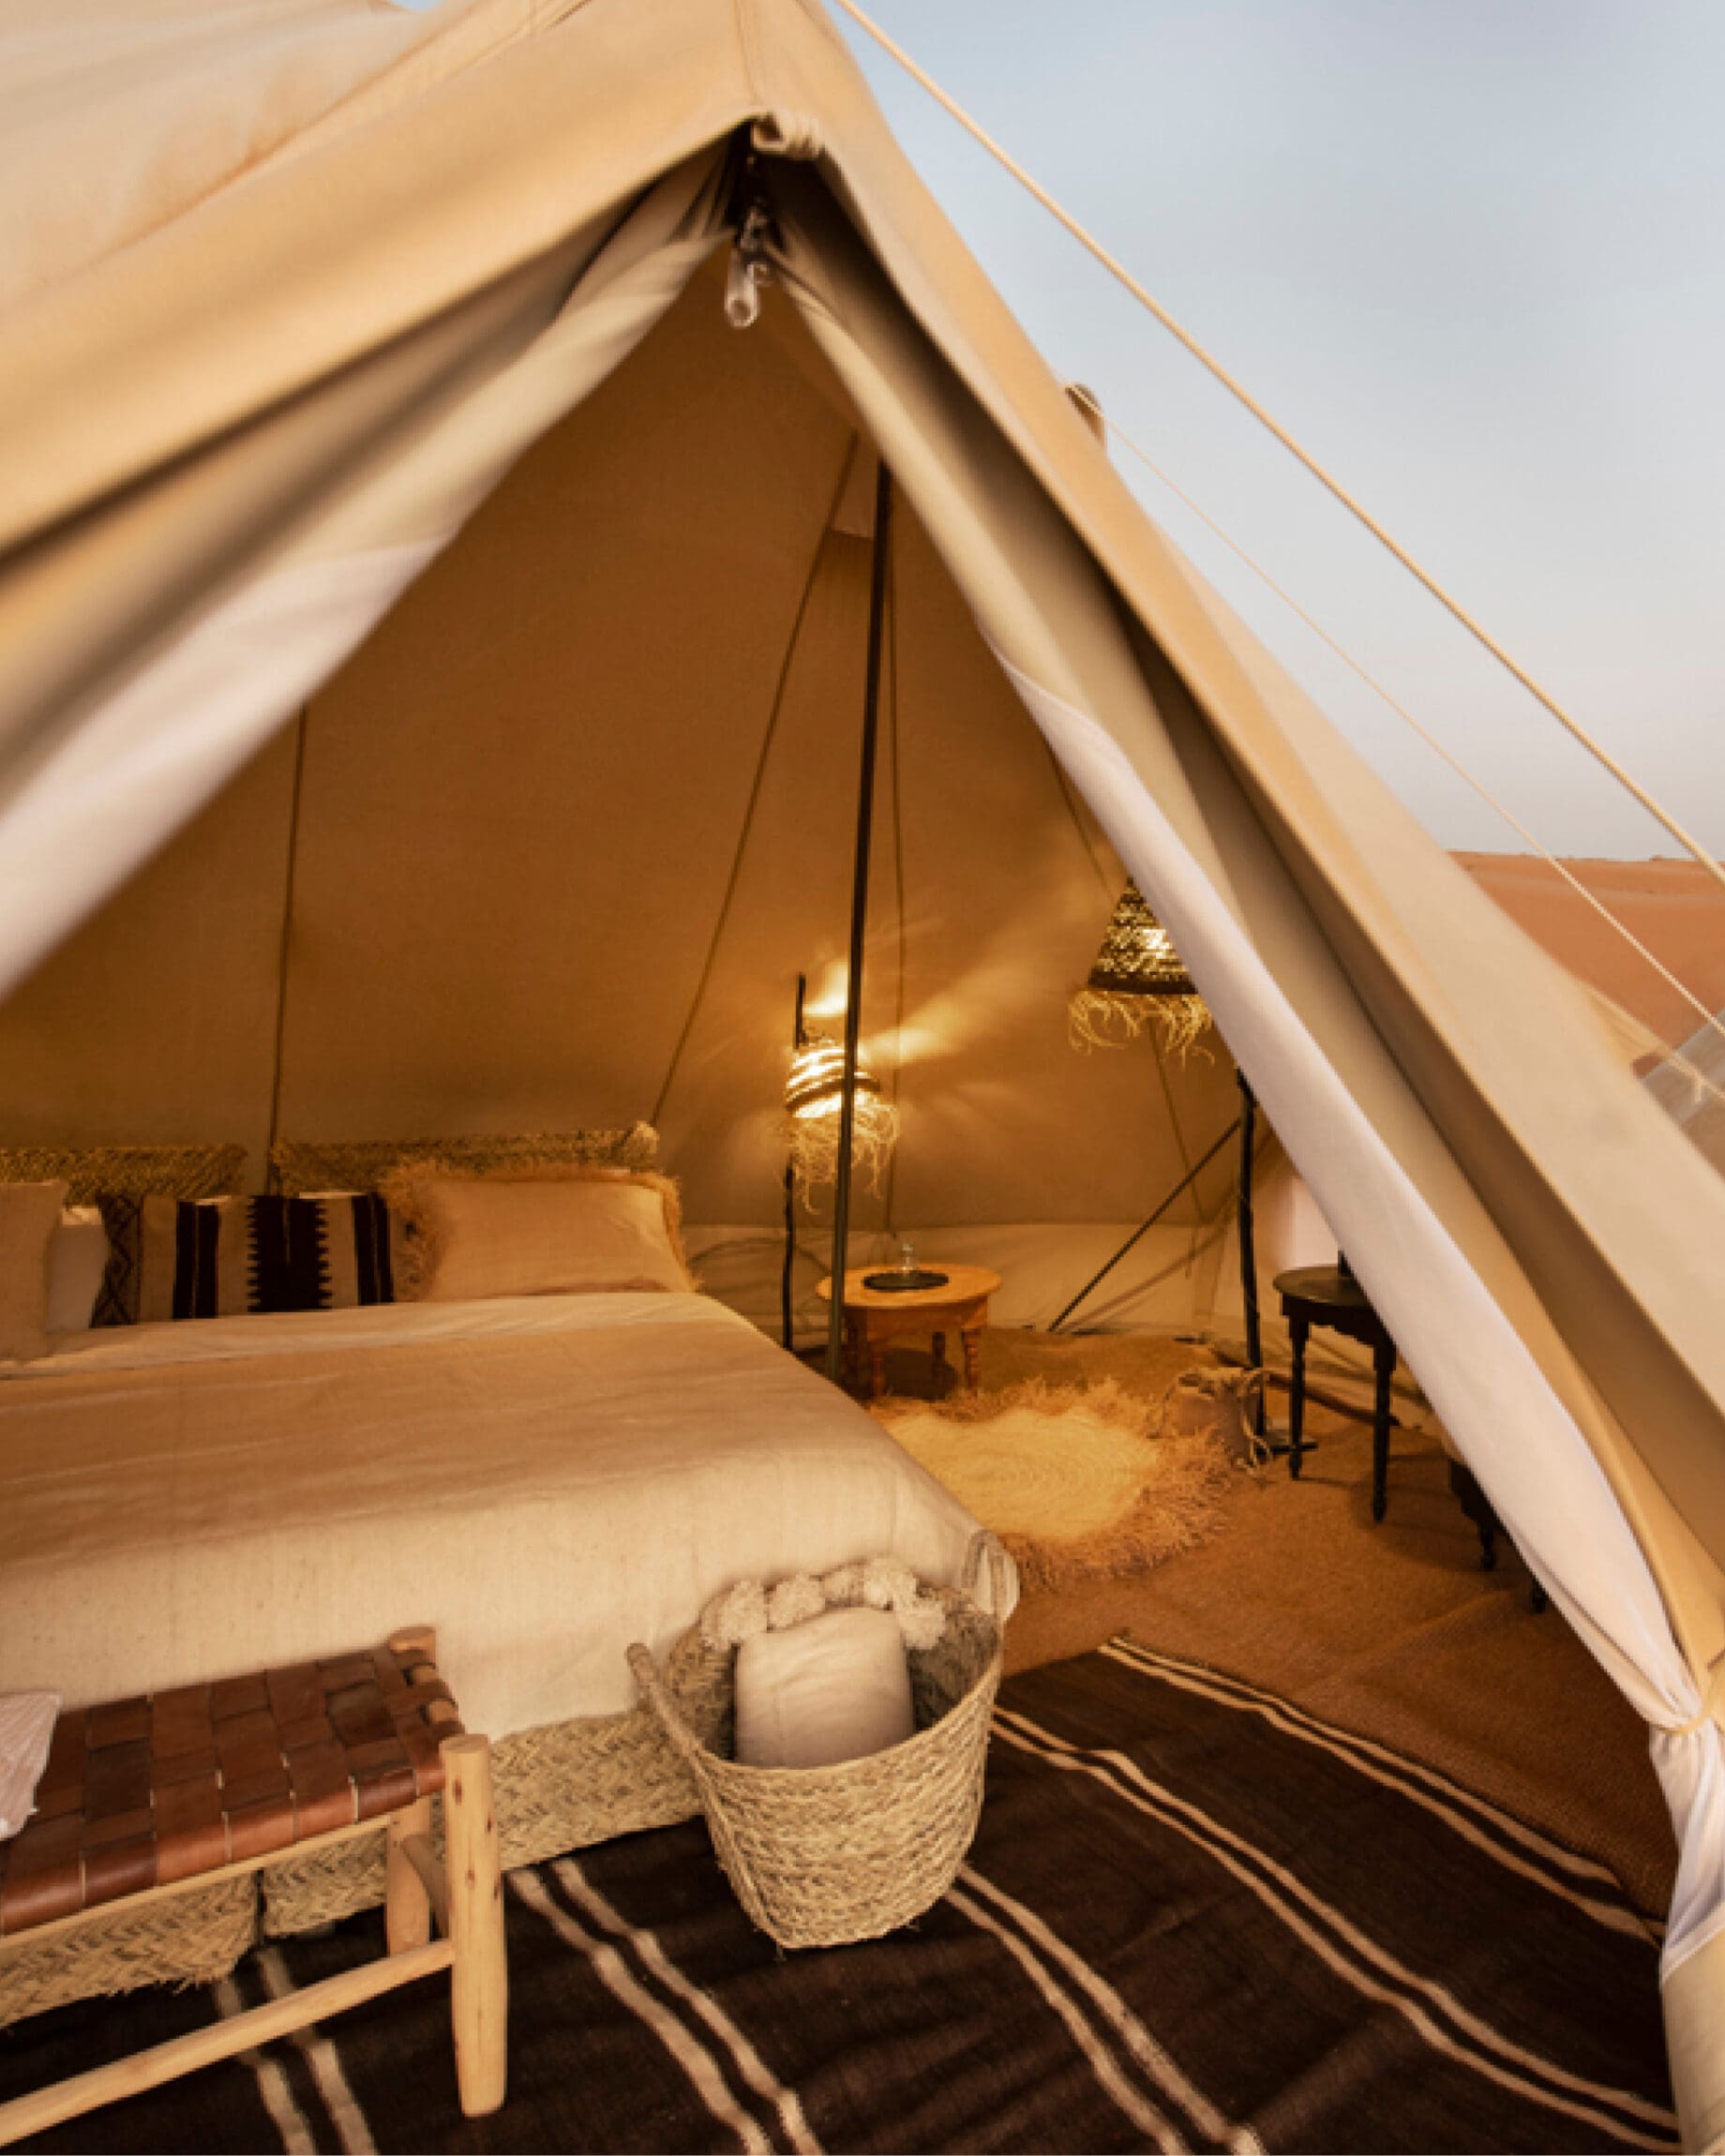 The best boutique hotels in Dubai | Plush tent interiors at Magic Camps Dubai